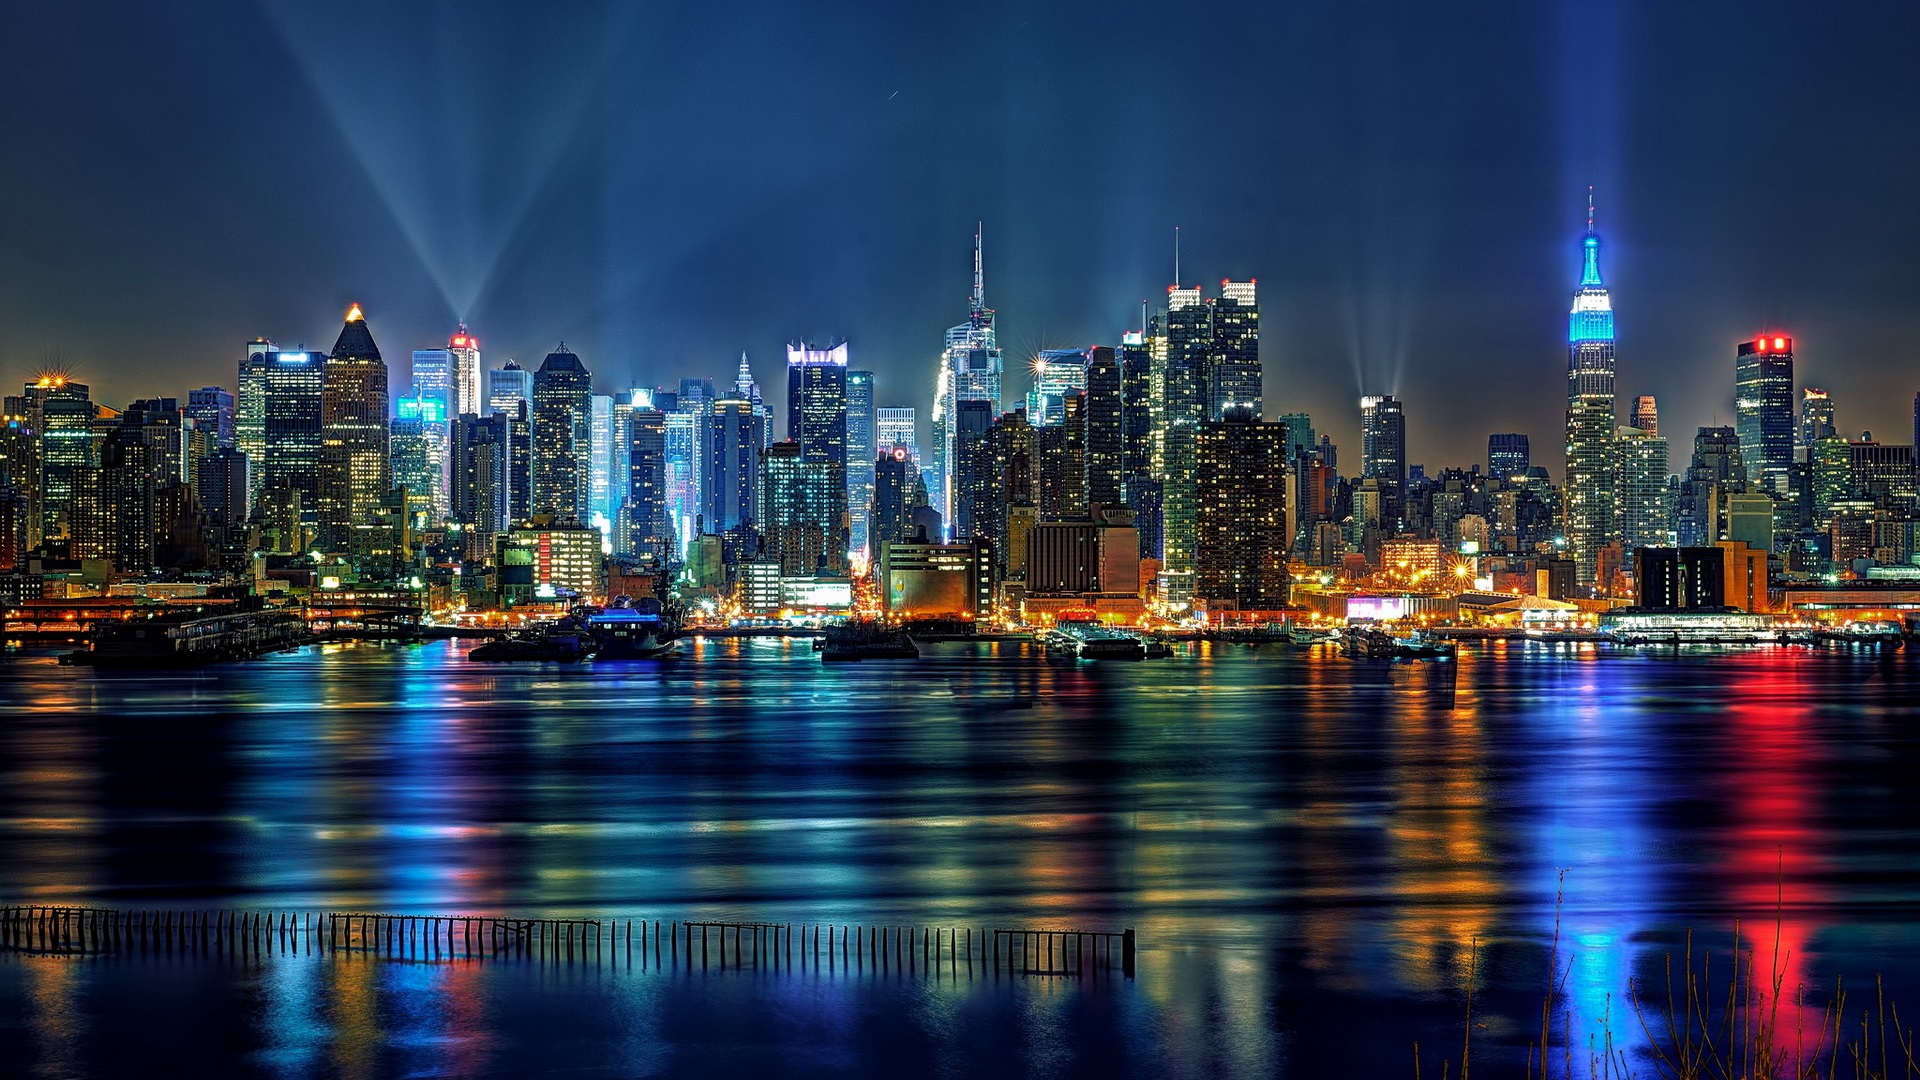 United-States-New-Jersey-Union-Hill-New-York-City-buildings-lights_1920x1080.jpg : 세계의 멋진 야경